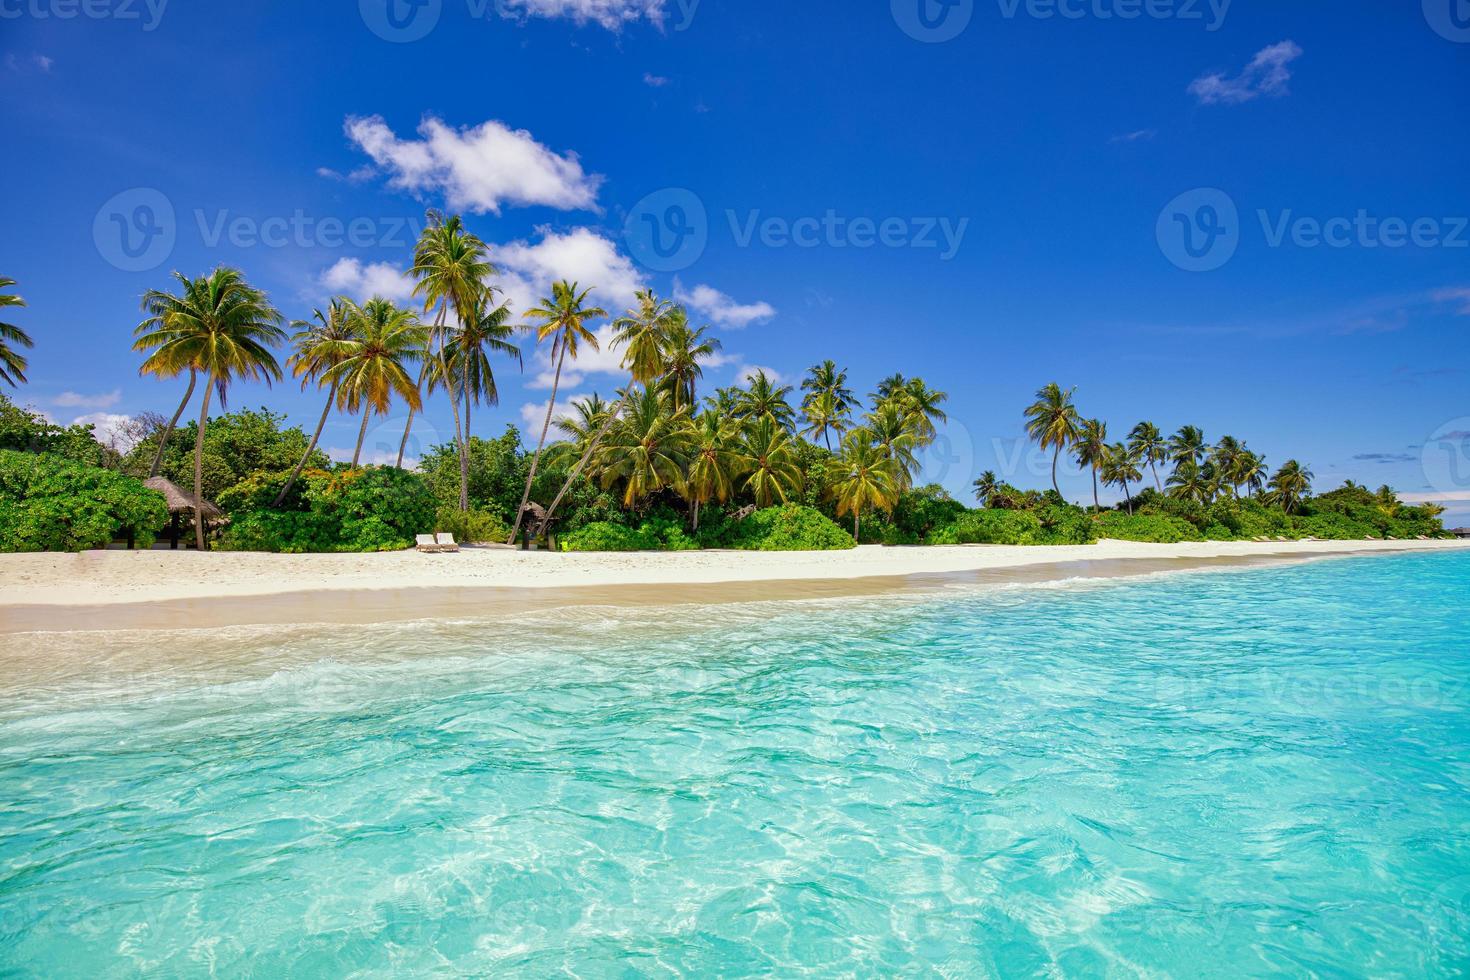 het beste zomer strand landschap. rustig tropisch eiland, paradijs kust, zee lagune, horizon, palm bomen en zonnig lucht over- zand golven. verbazingwekkend vakantie landschap achtergrond. mooi vakantie strand foto